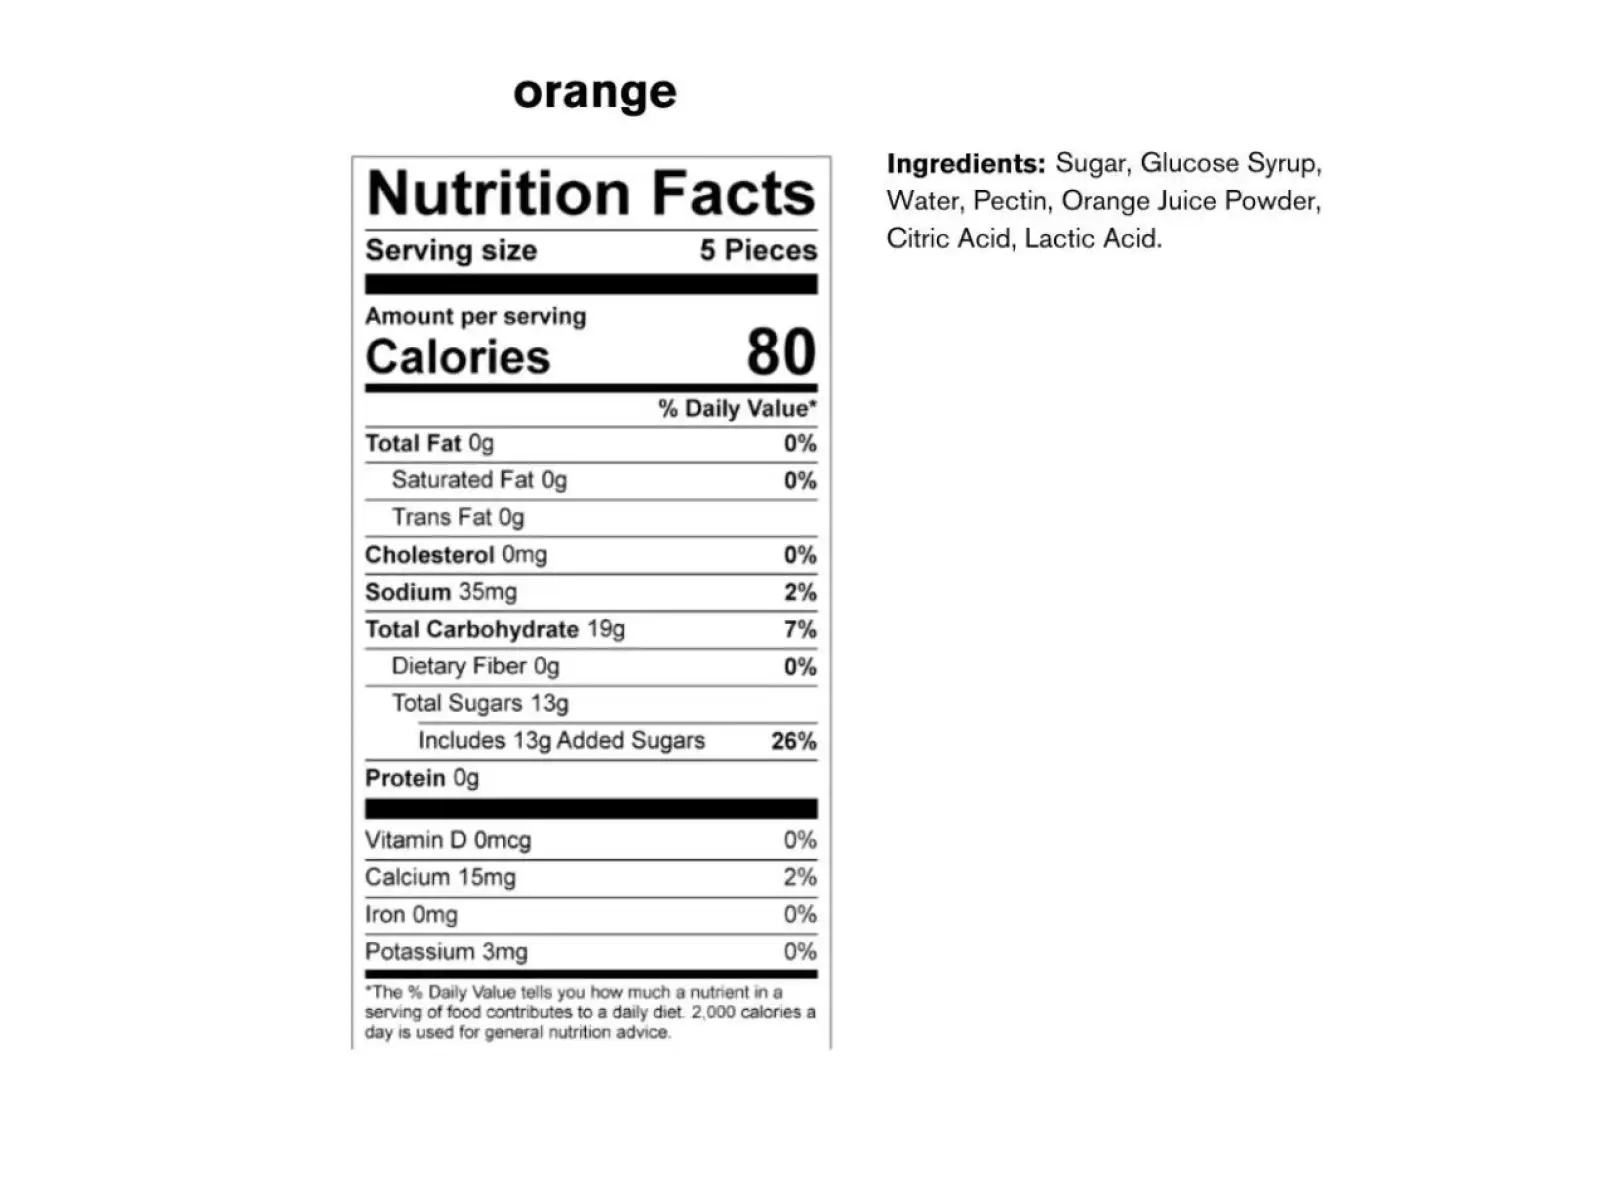 Skratch Labs Energy Chews ovocné bonbóny 50 g pomeranč